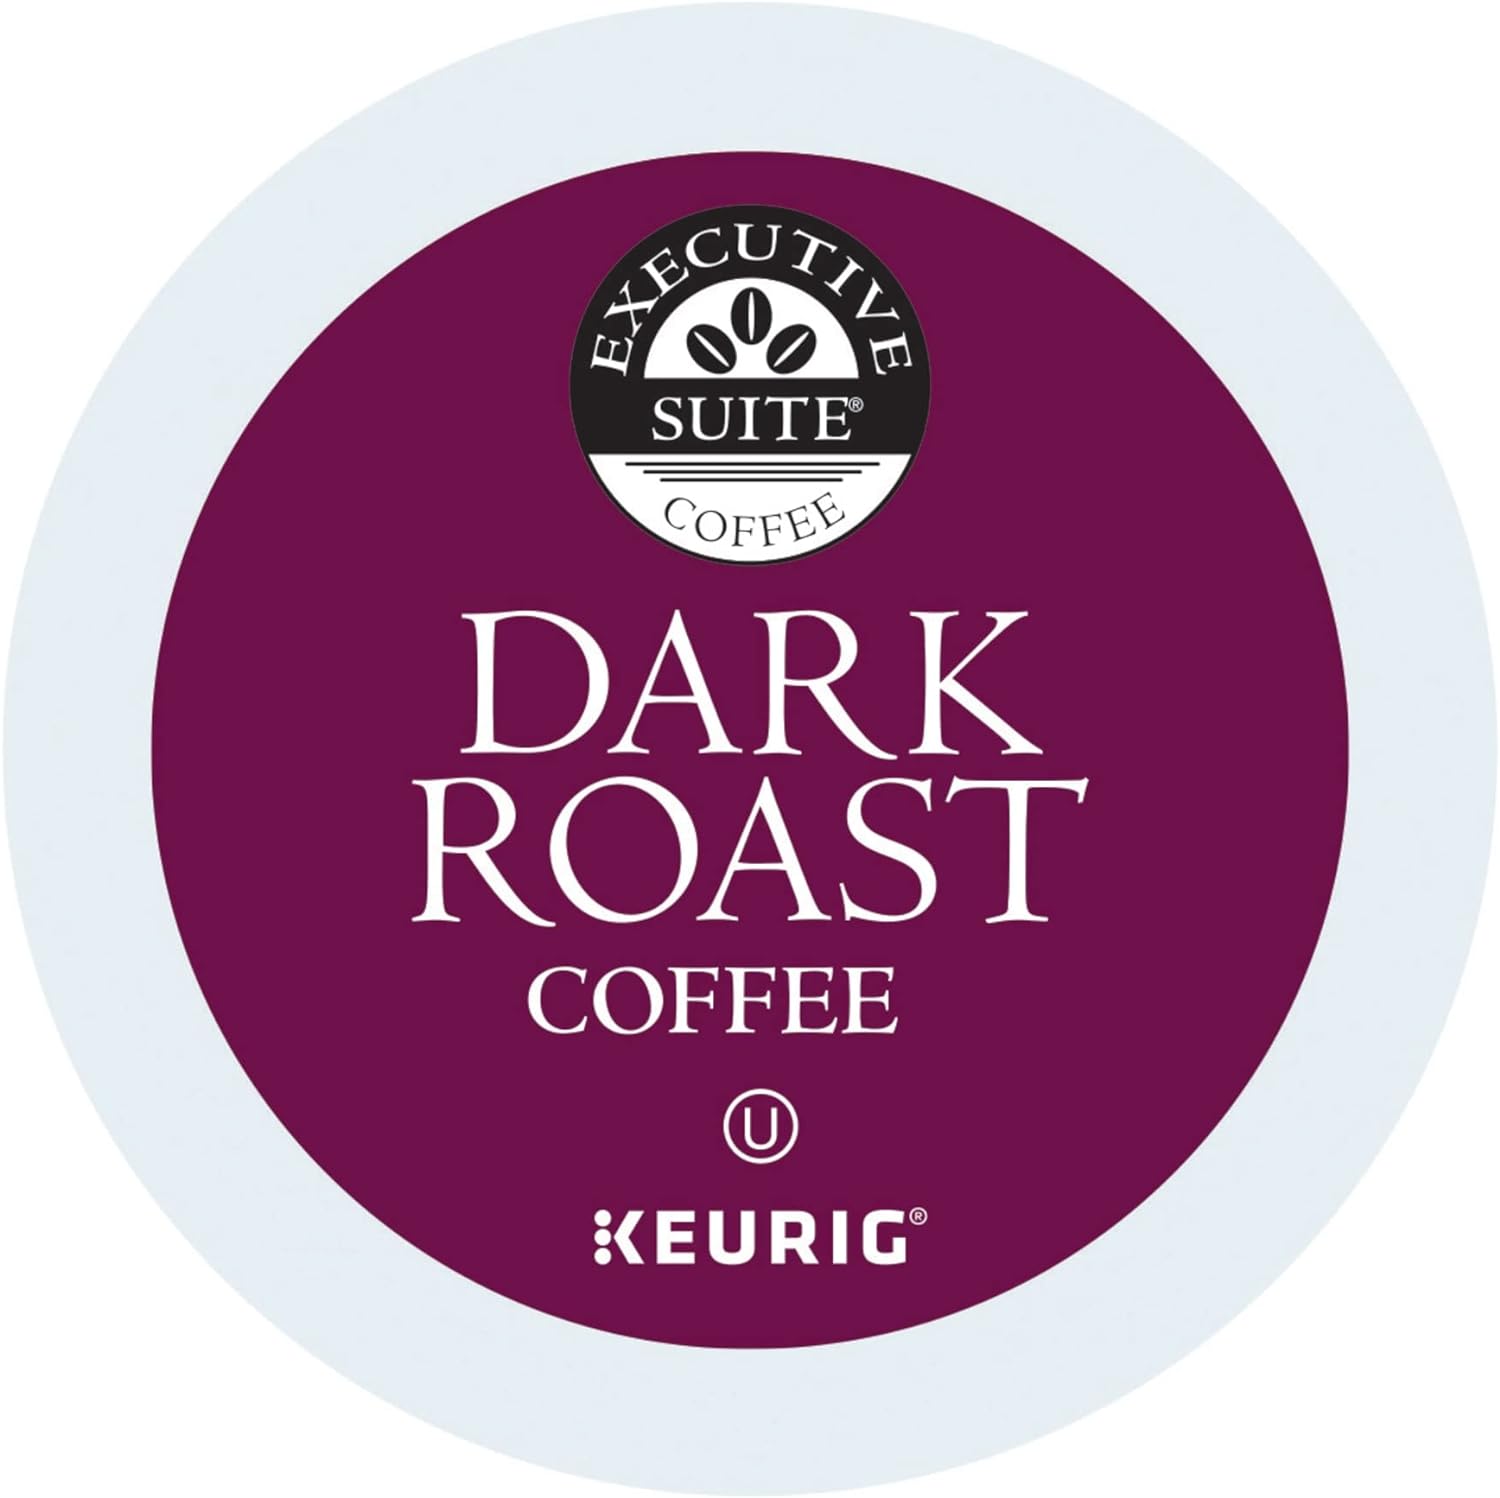 Executive Suite Dark Roast Coffee Keurig® K-Cup® Pods, Box of 70 Pods